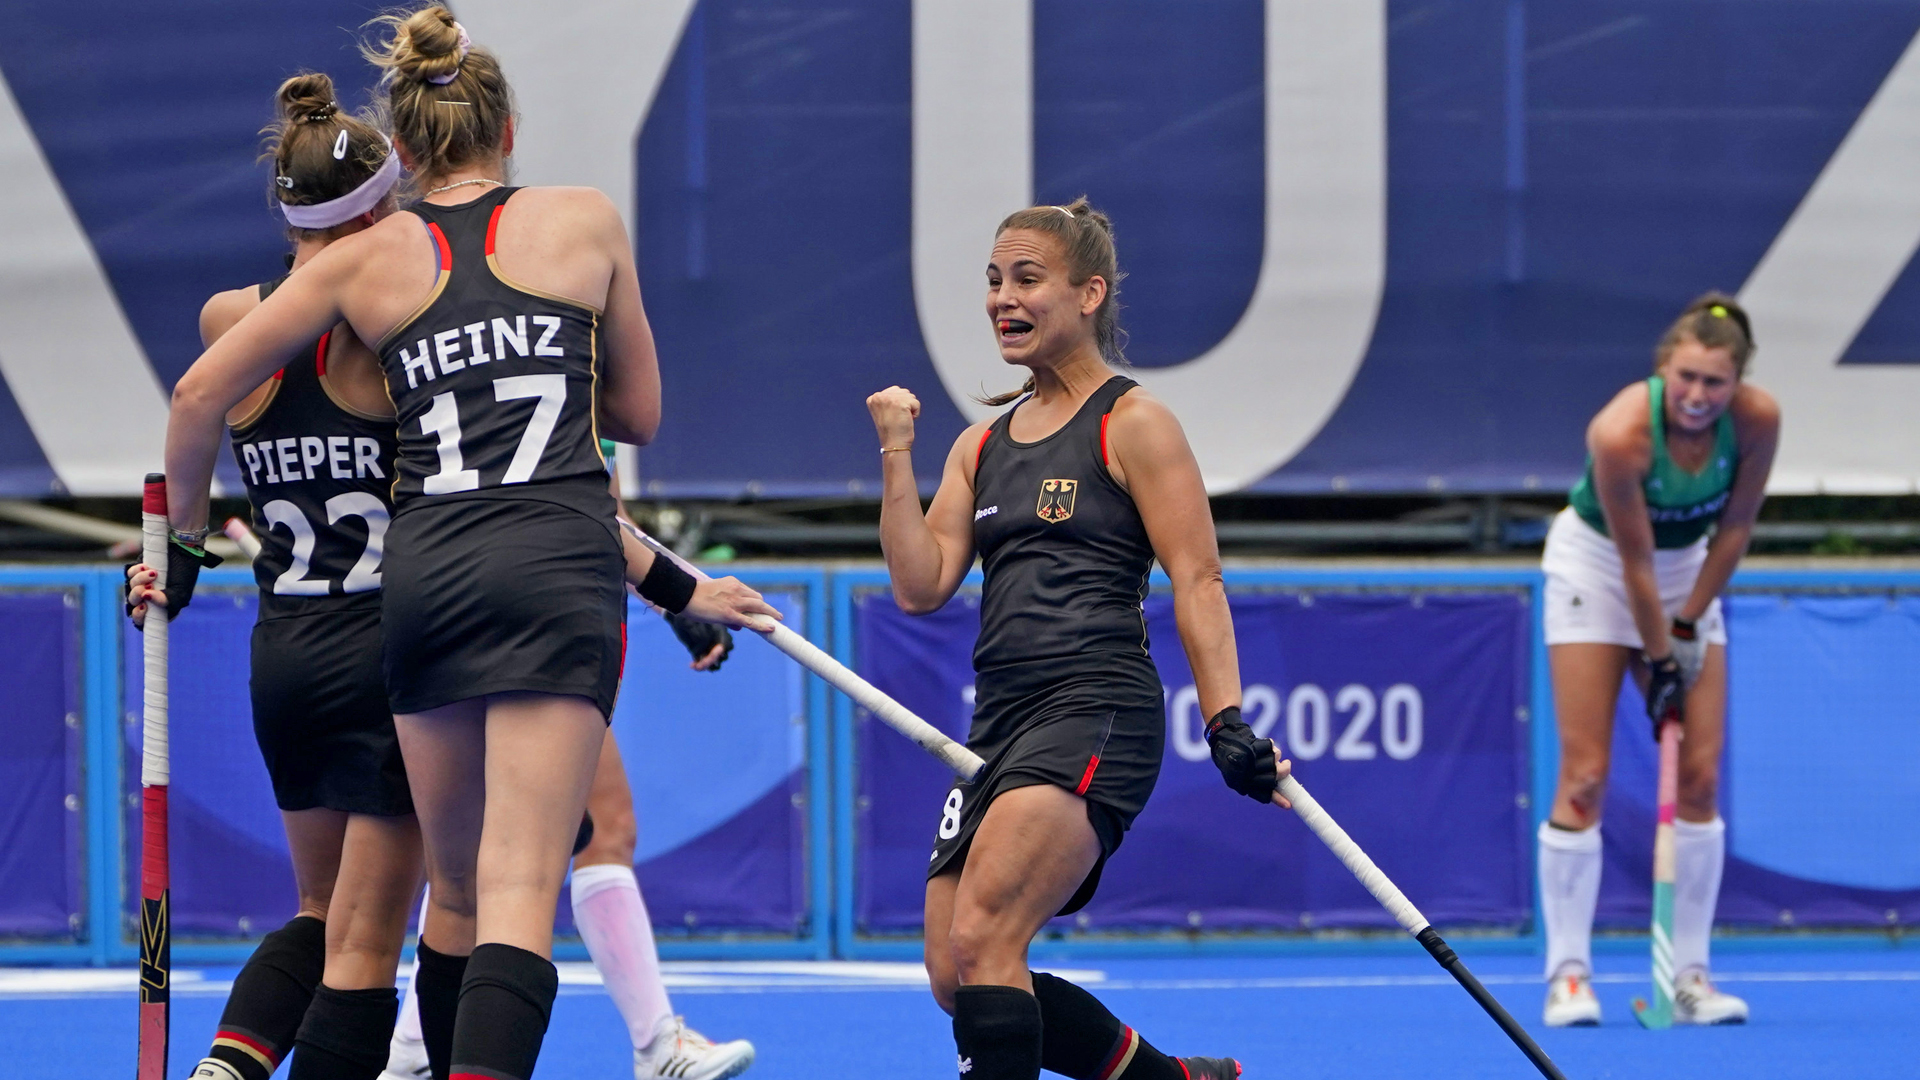 Hockey-Frauen machen Olympia-Viertelfinale klar Sportschau - sportschau.de/olympia